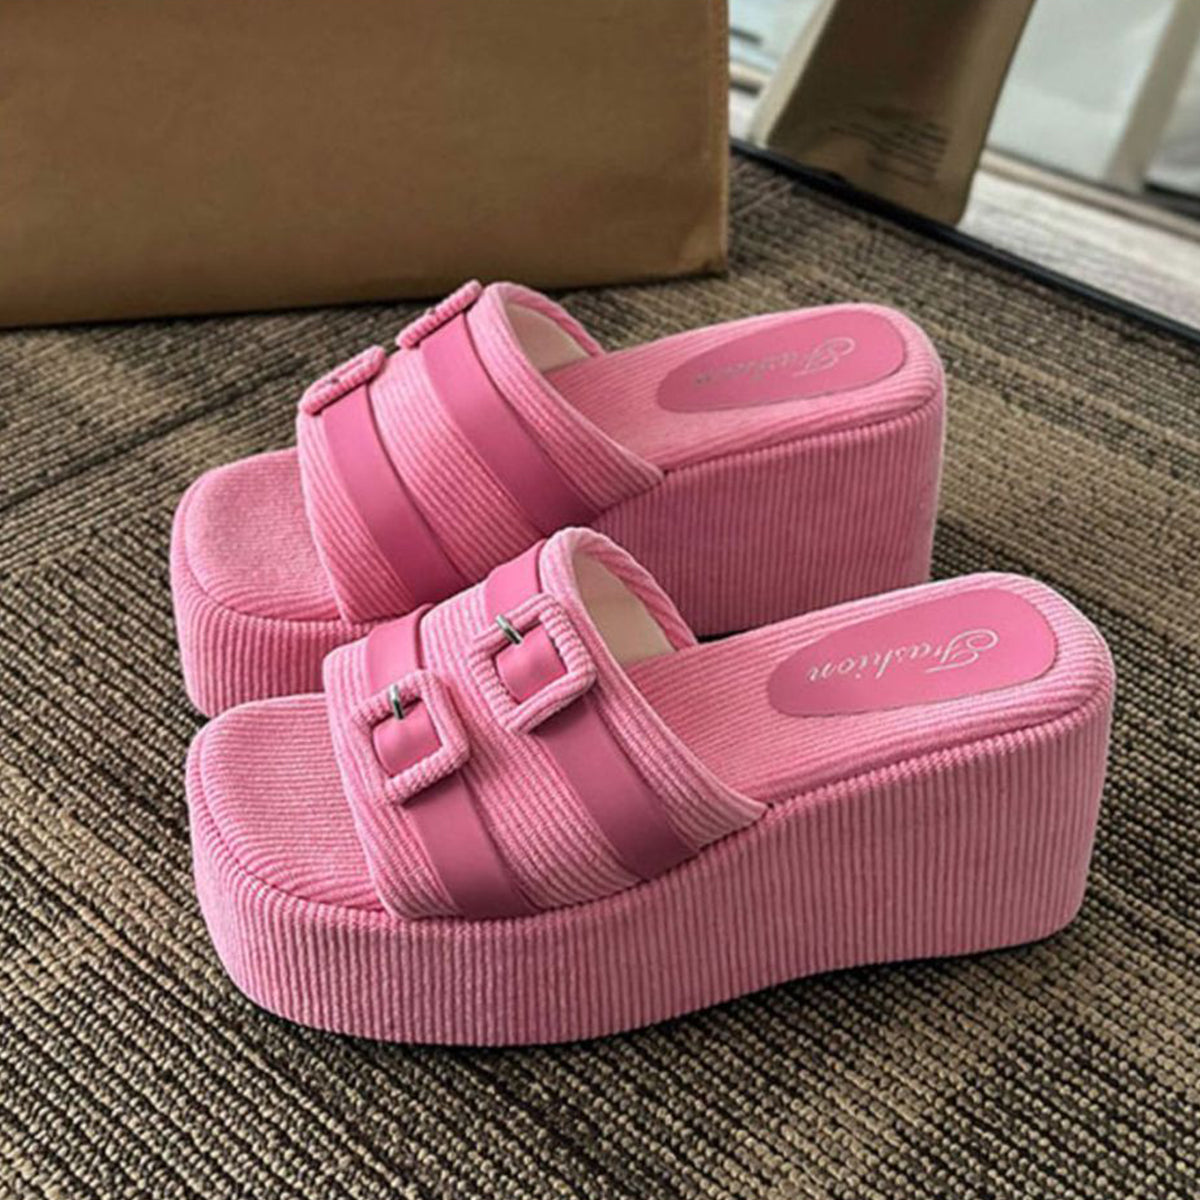 Open Toe Wedge Suede Sandals Hot Pink